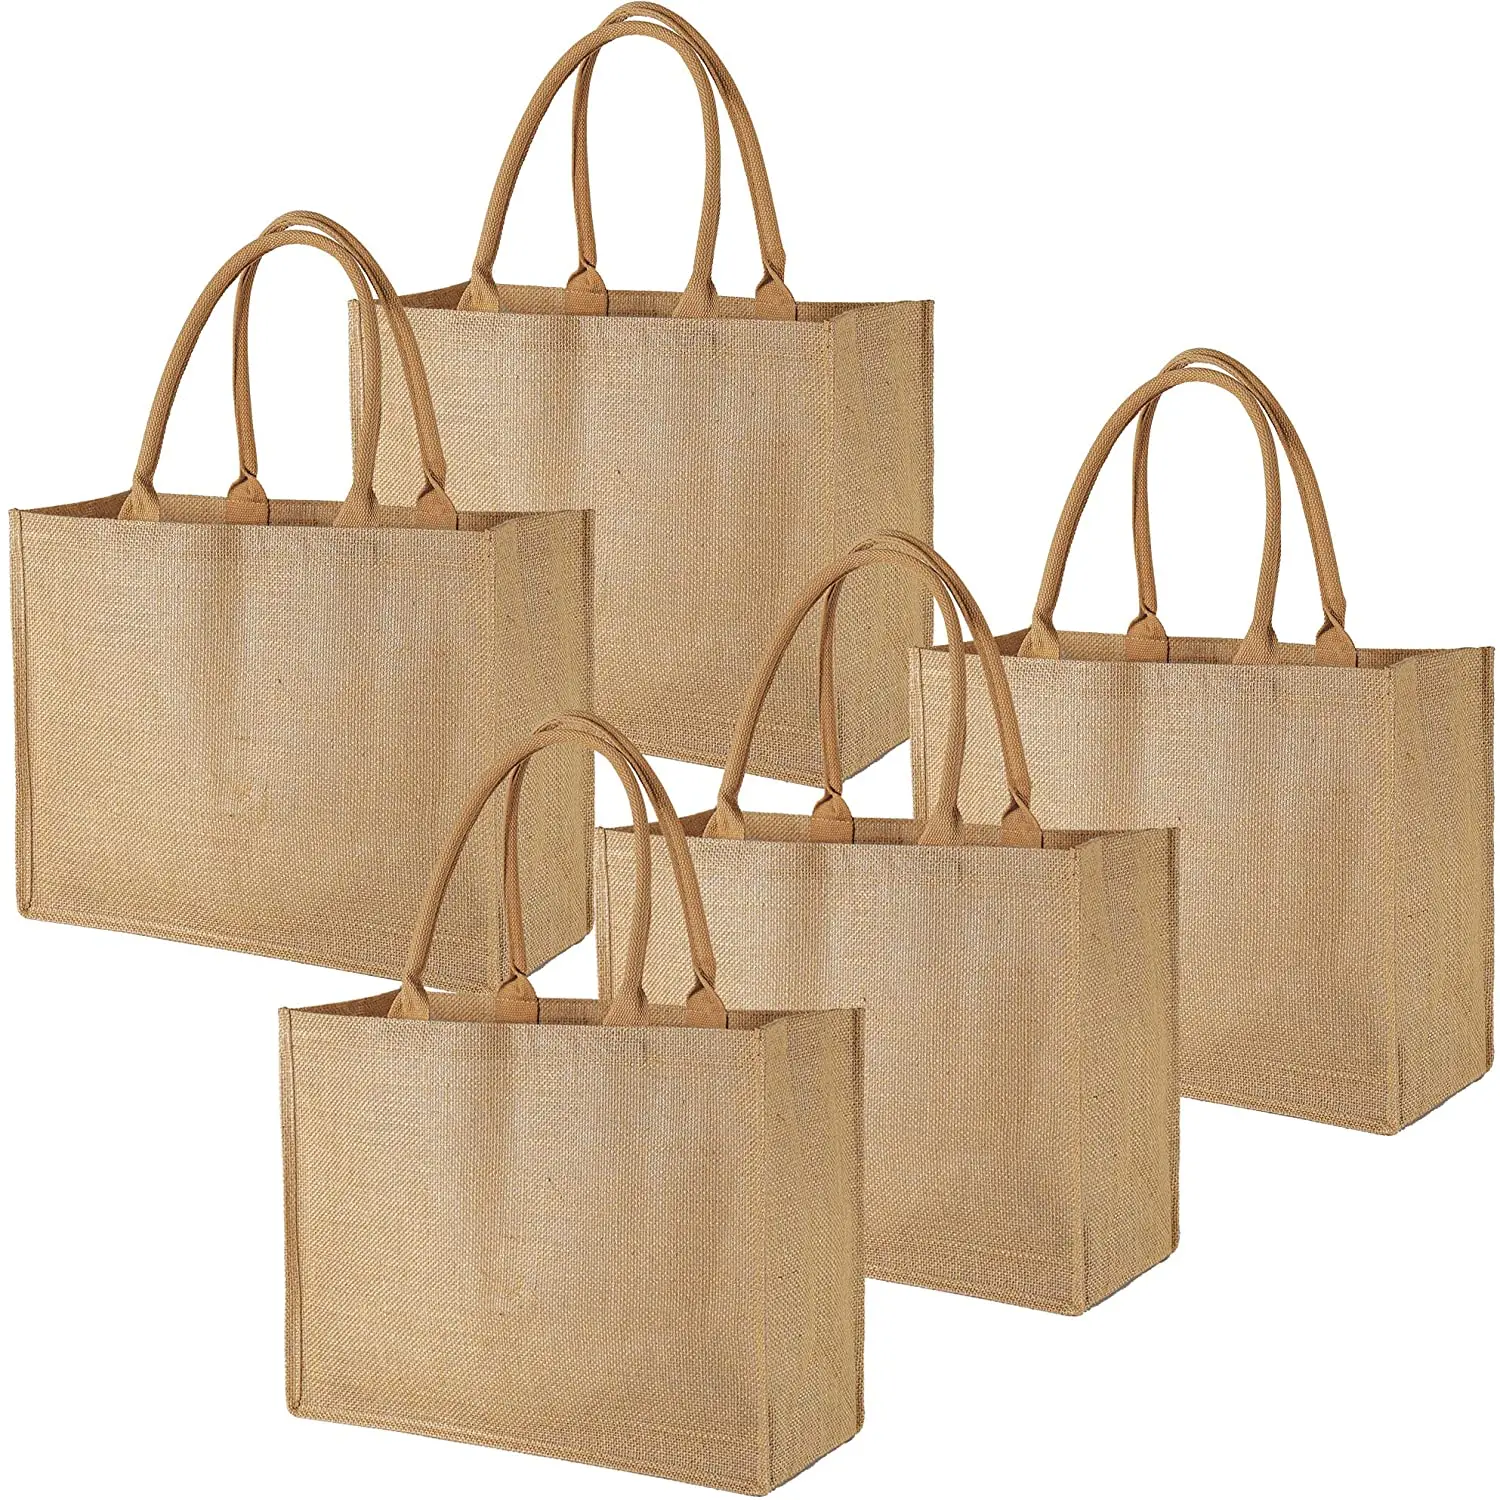 Source Wholesale Custom Printed Natural Plain Burlap Shopping shipping bags on